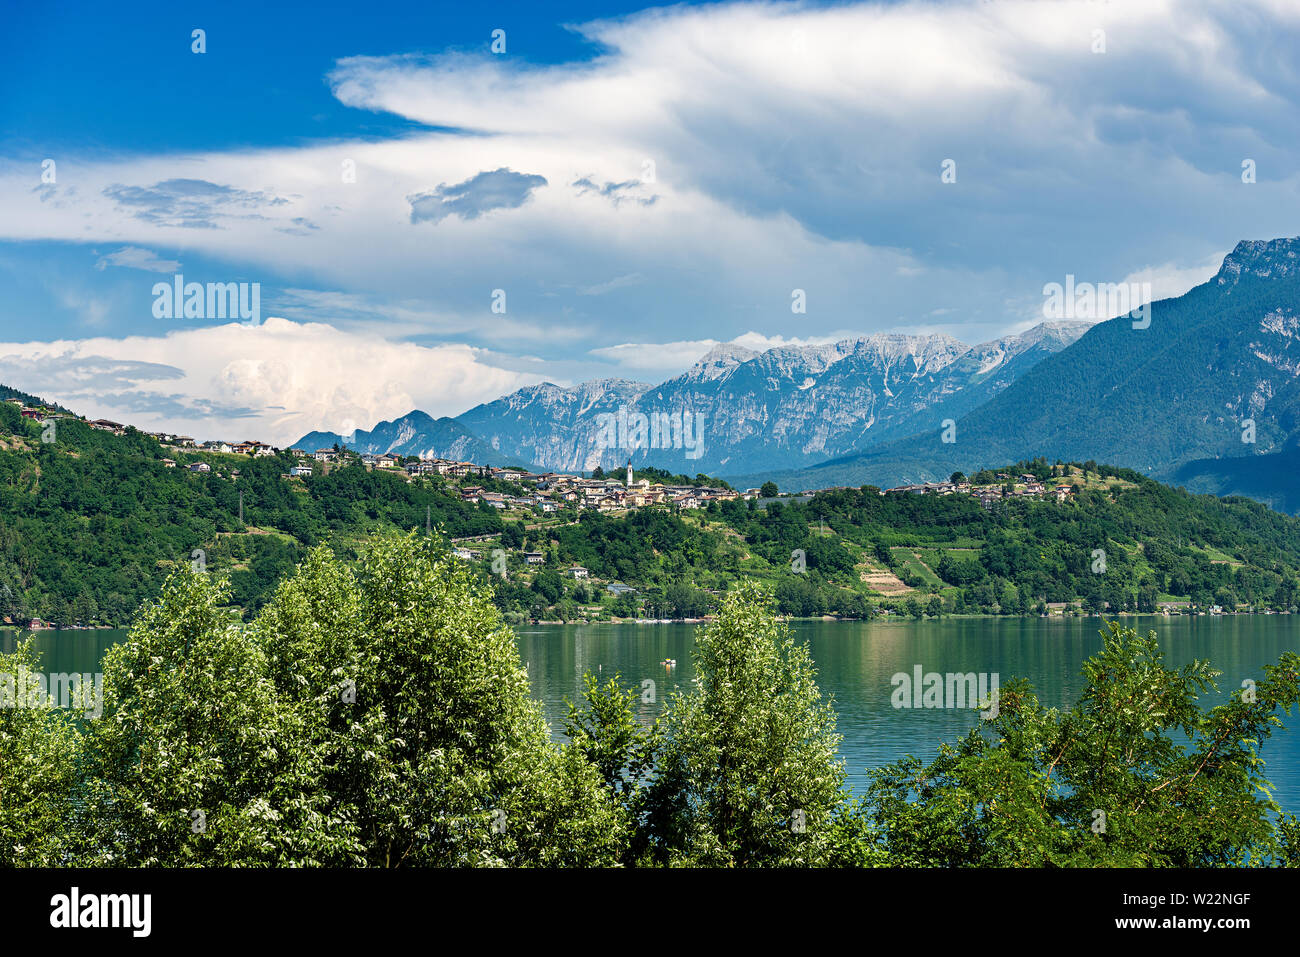 Caldonazzo lake (Lago di Caldonazzo) with the Alps and small village of Tenna, Valsugana valley, Trento province, Trentino Alto Adige, Italy, Europe Stock Photo